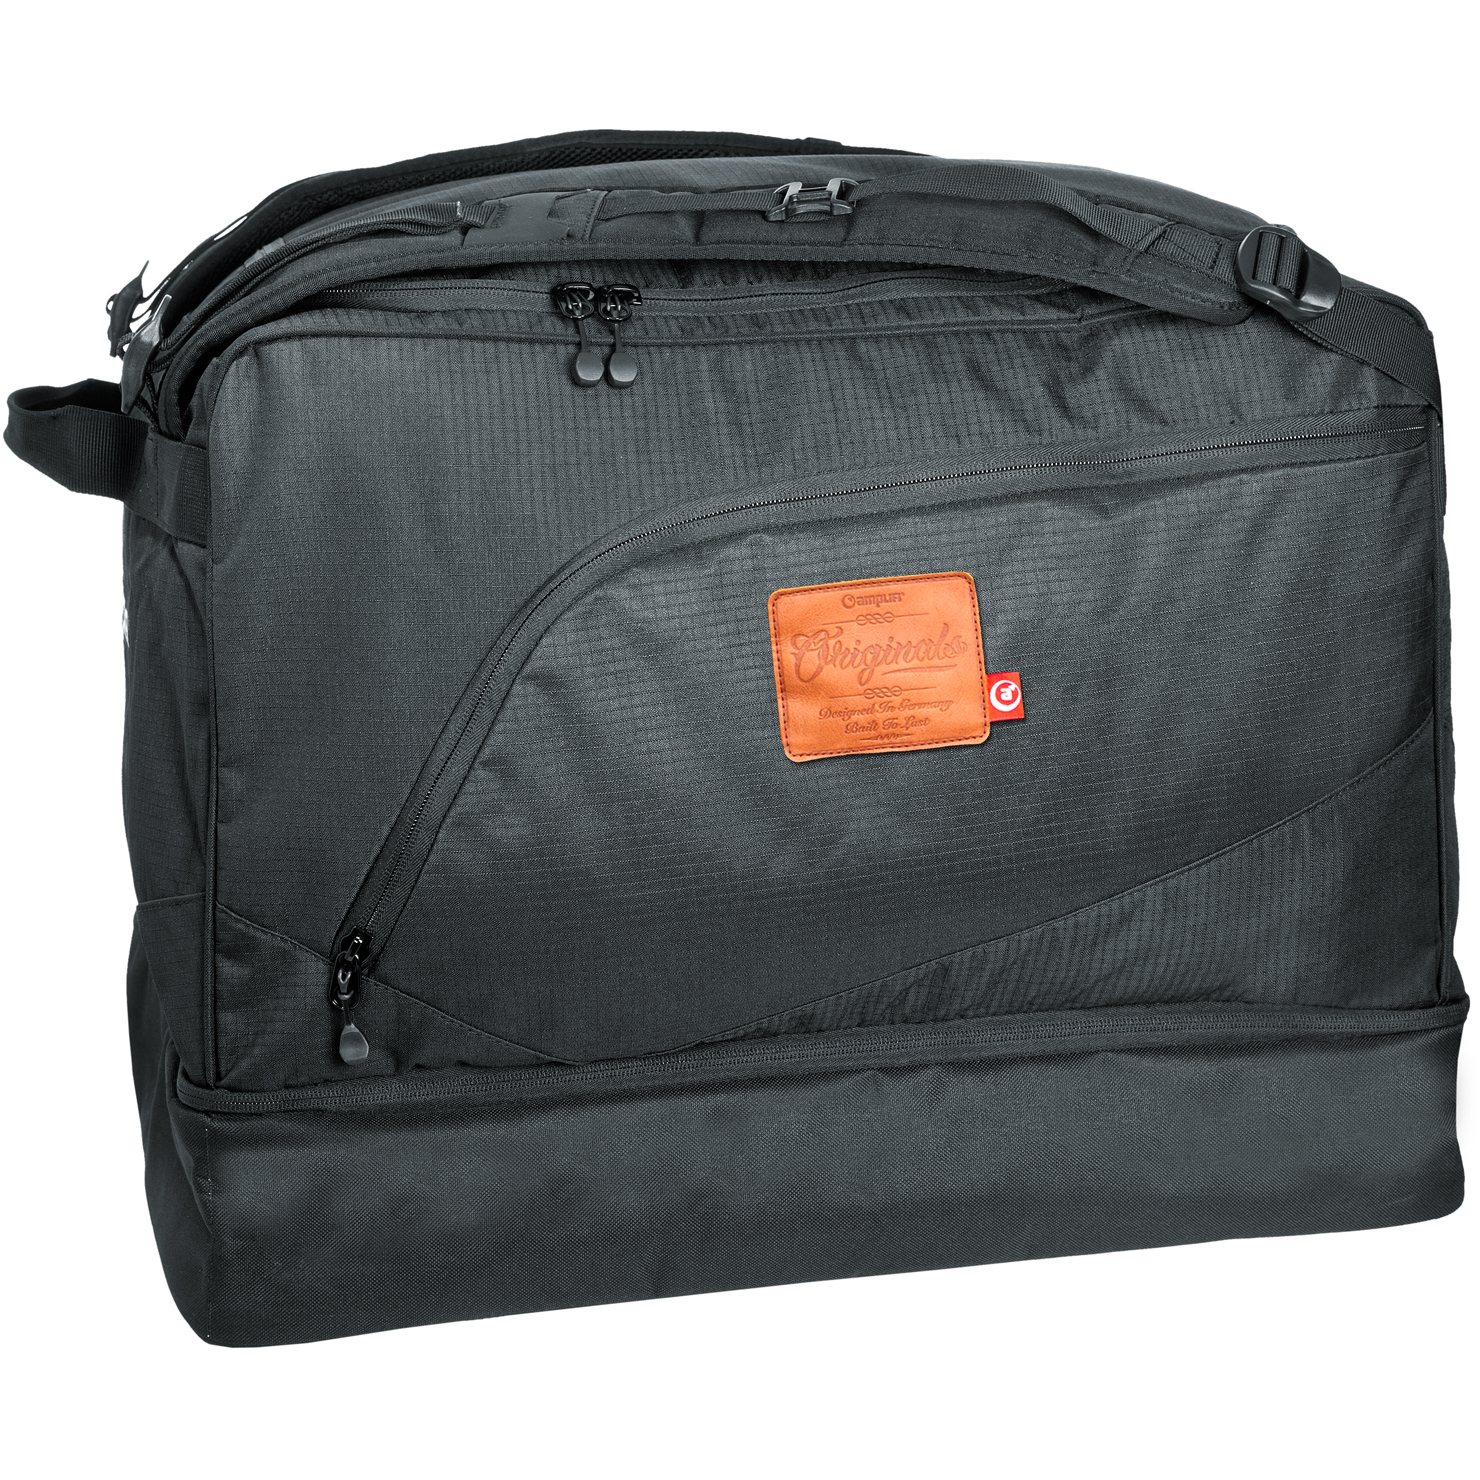 Image of Amplifi Travel Torino 55L Travel Bag - black